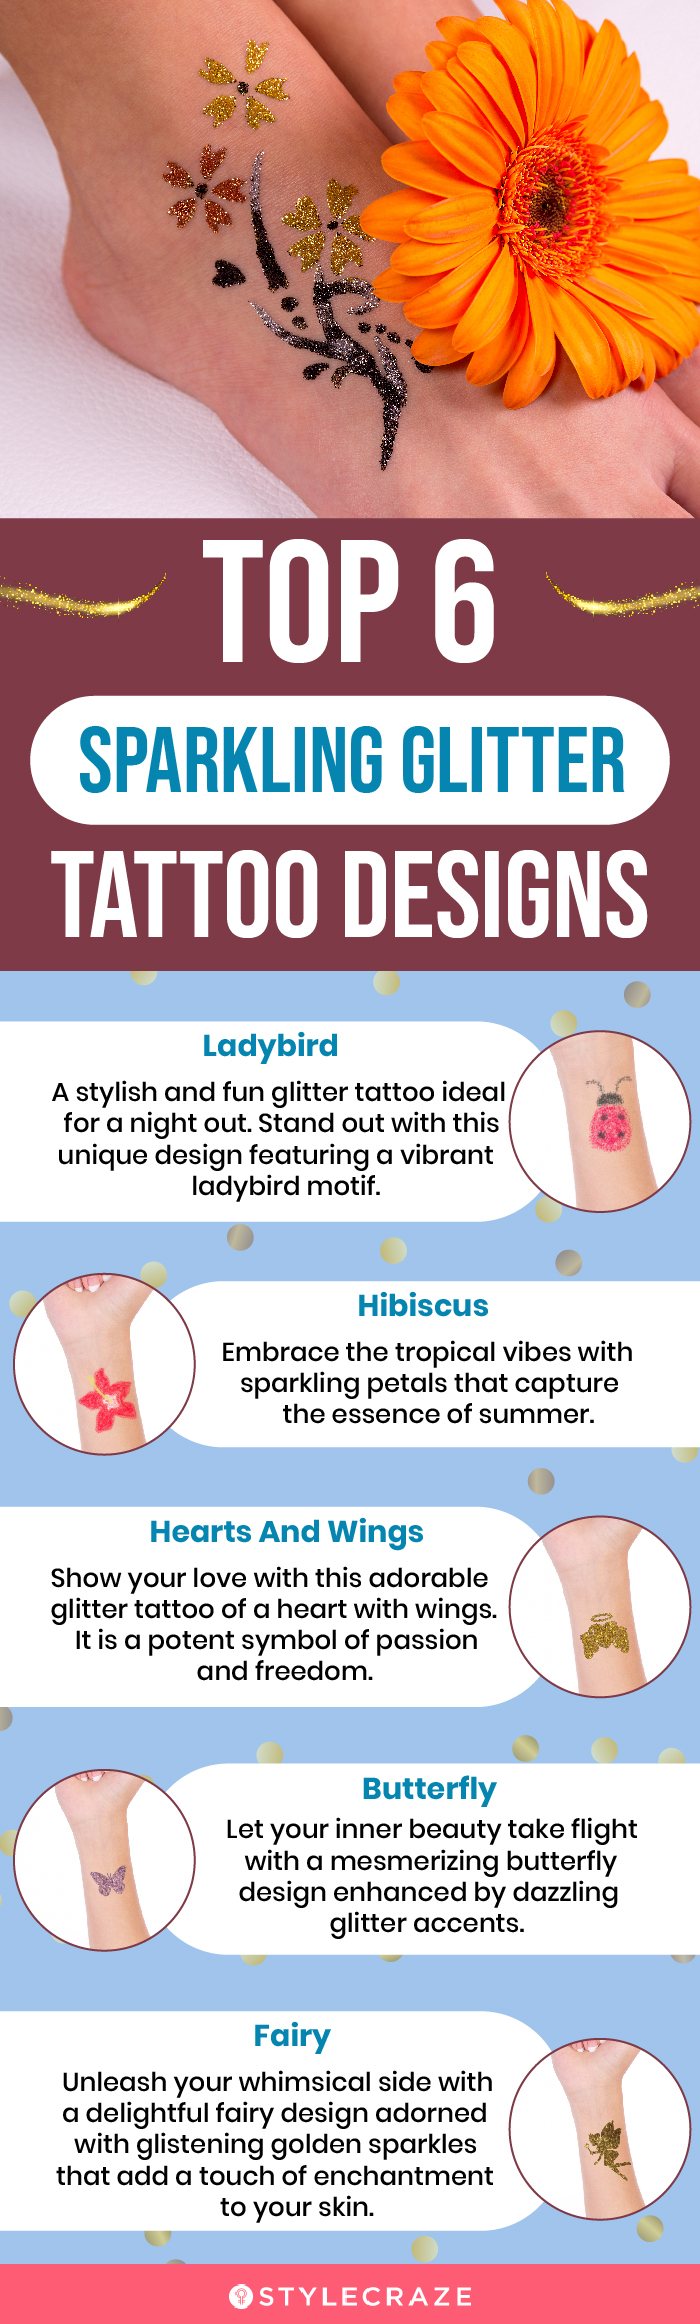 top 6 sparkling glitter tattoo designs (infographic)